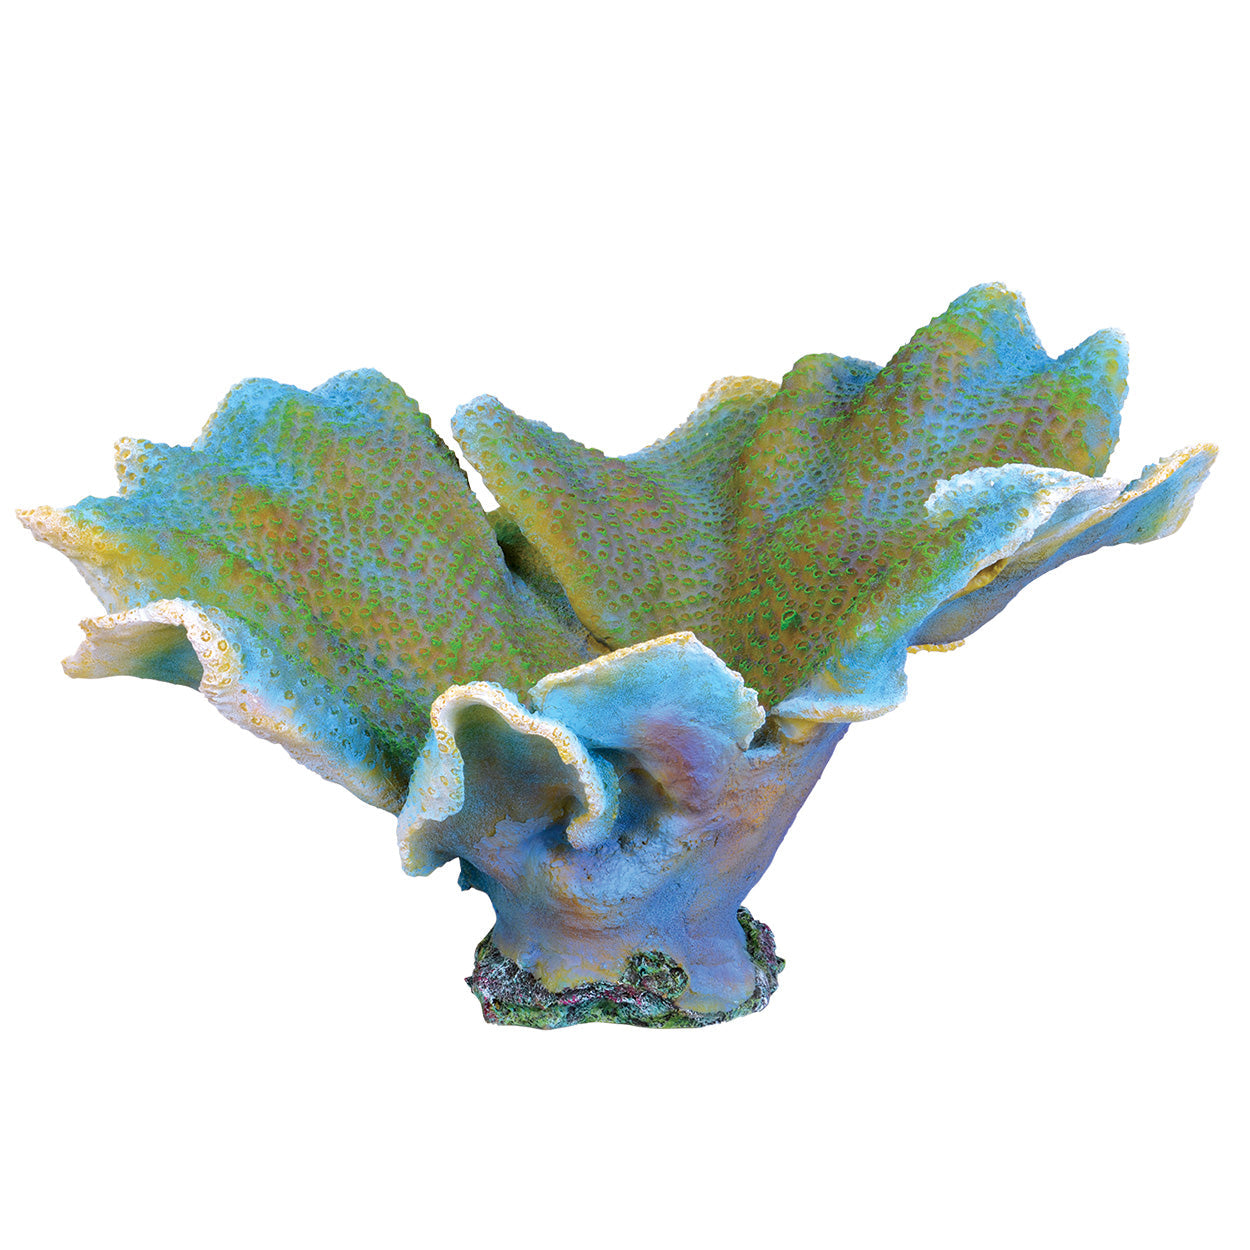 Underwater Treasures Giant Salad Bowl Coral